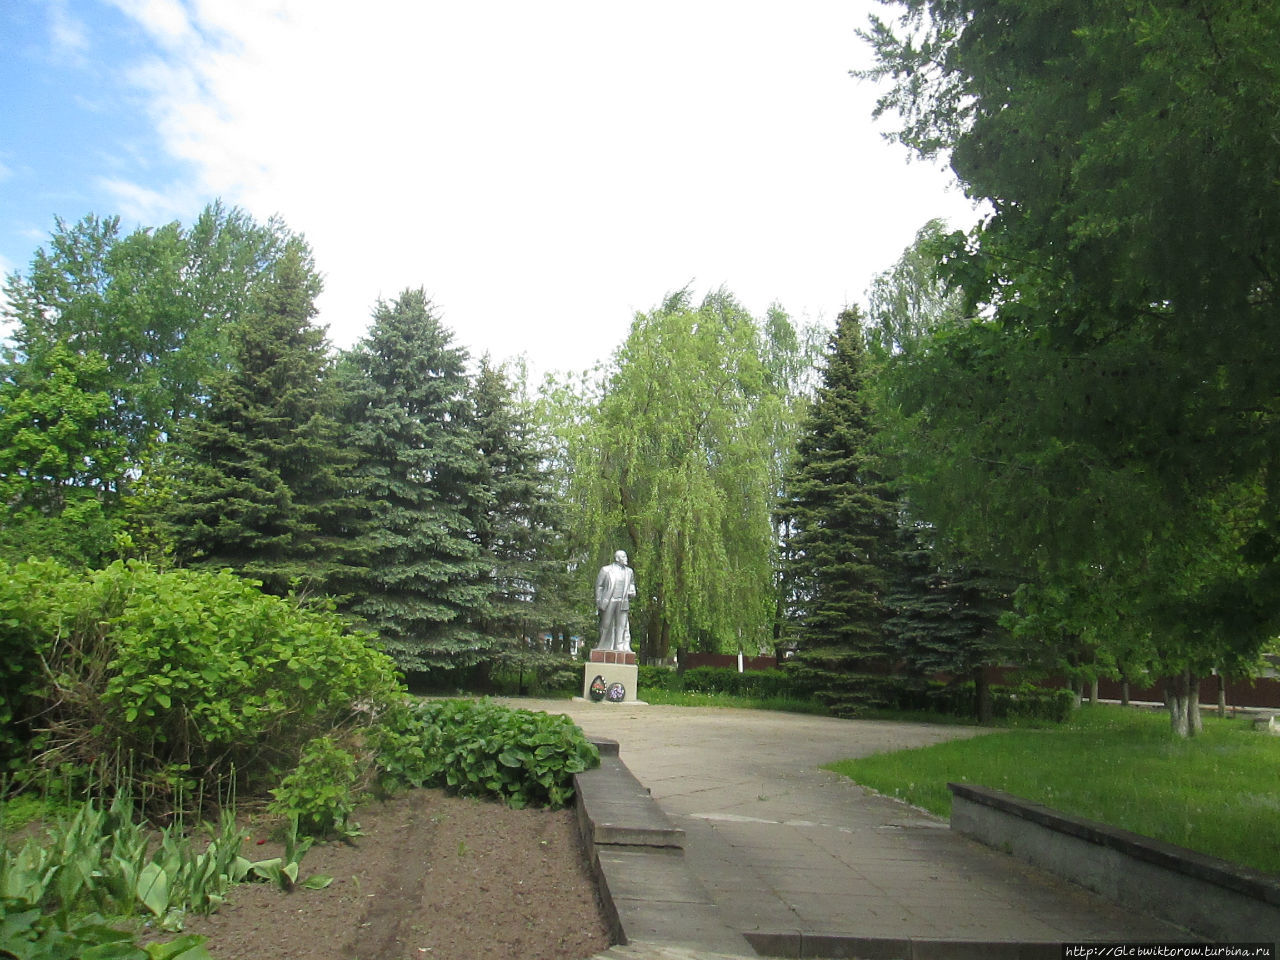 Прогулка по паркам с памятниками Верхнедвинск, Беларусь